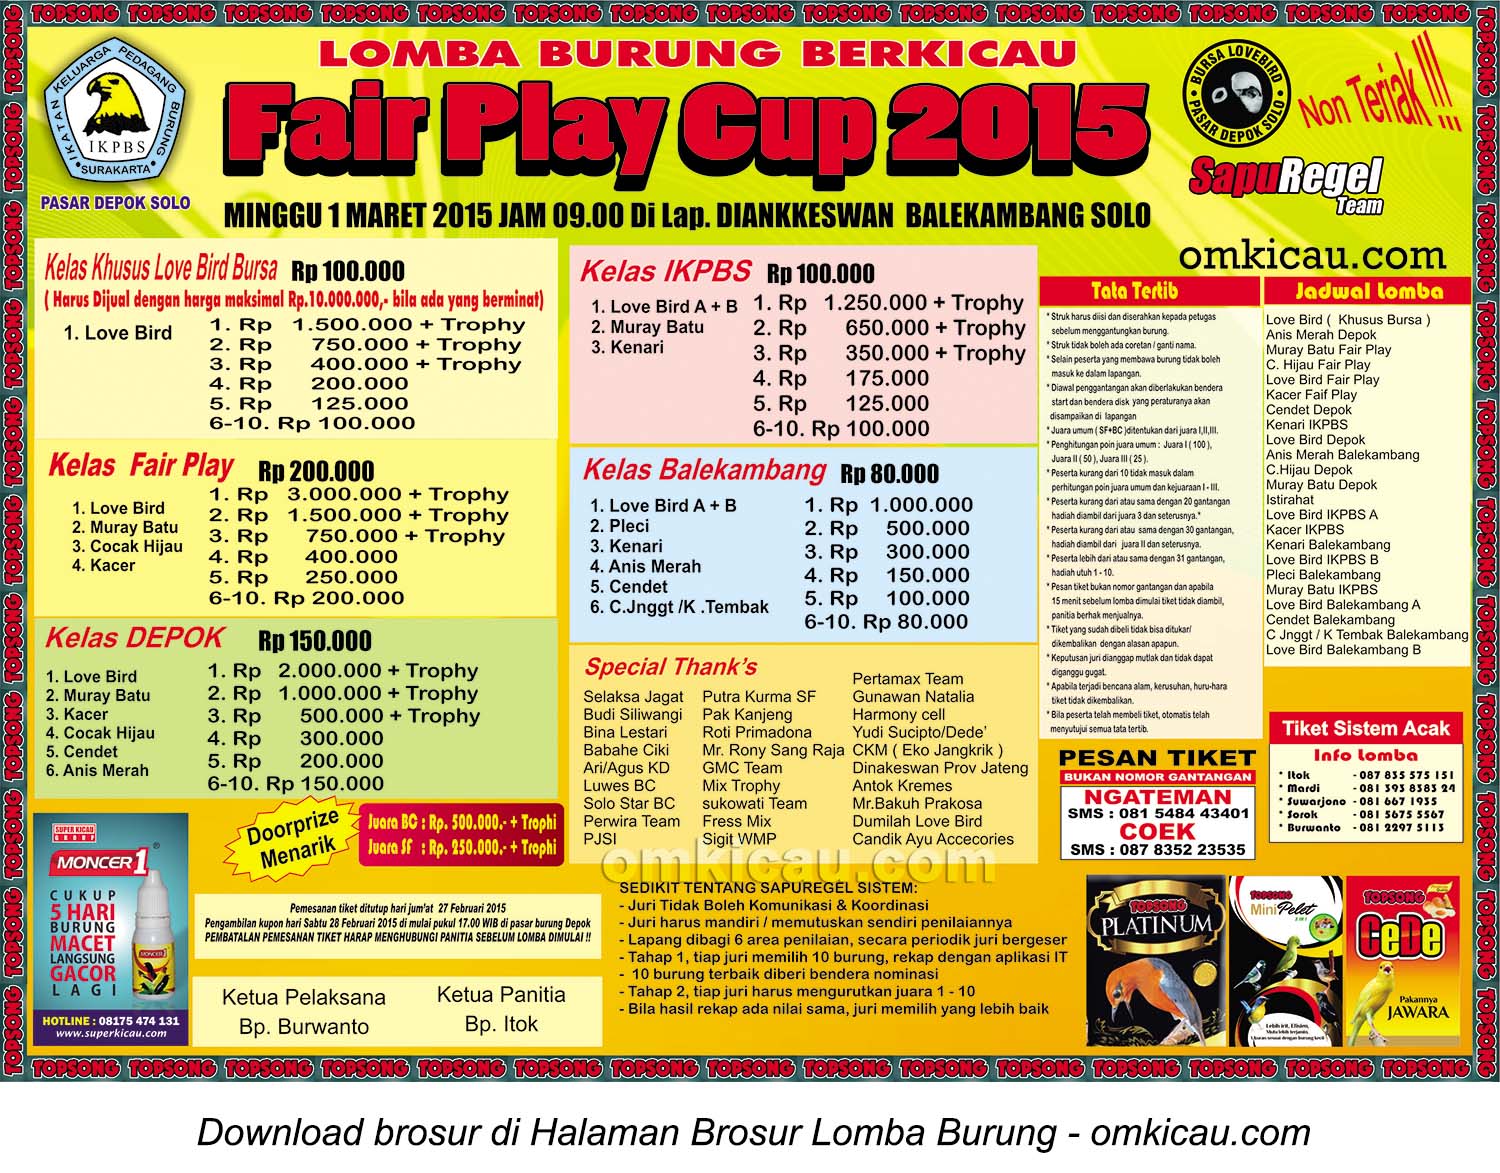 Brosur Lomba Burung Berkicau FairPlay Cup 2015, Solo, 1 Maret 2015